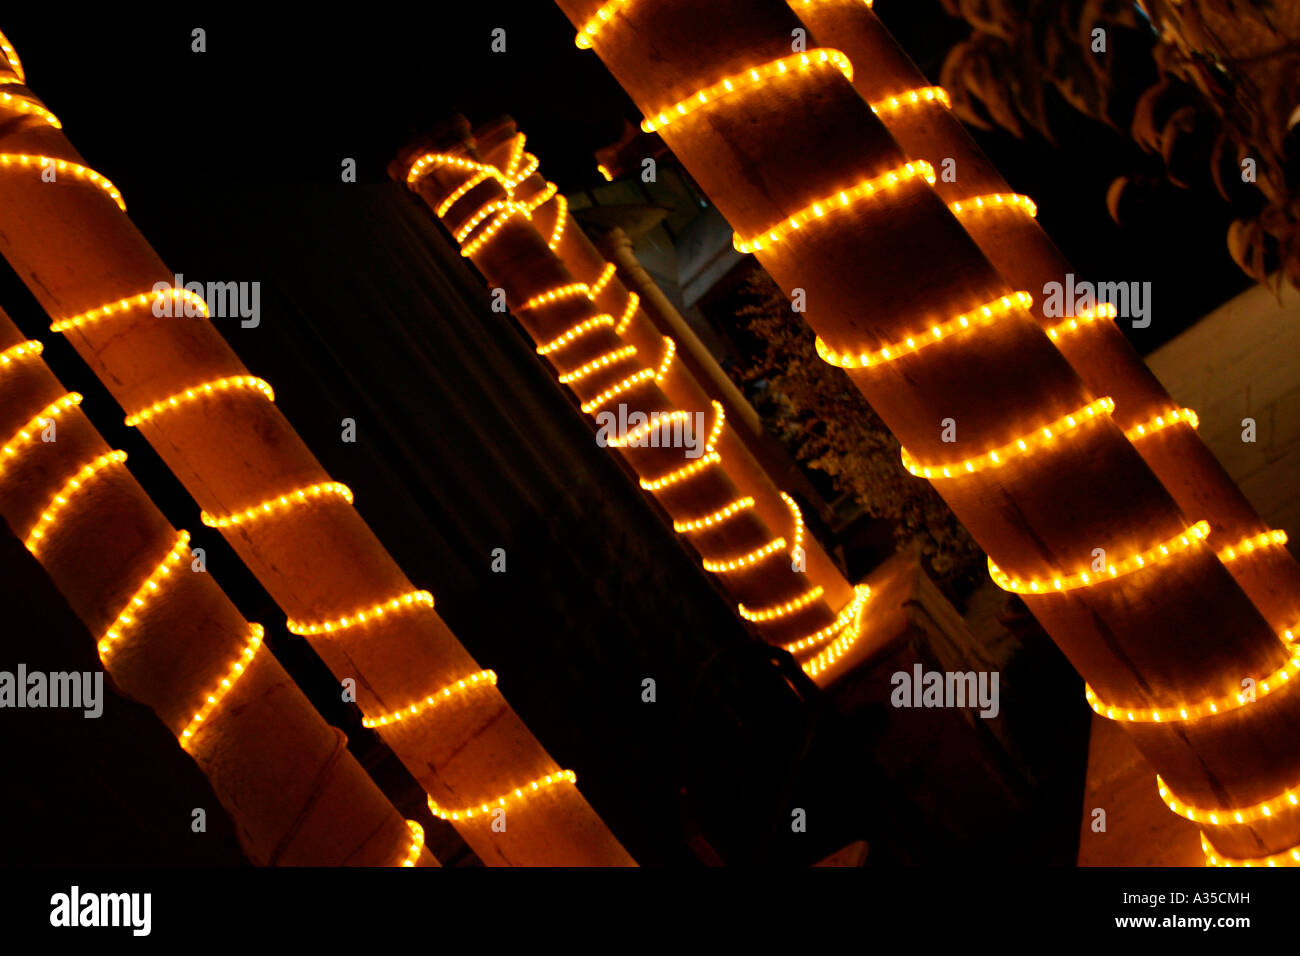 Illuminated pillars at a bazaar, New Delhi Stock Photo